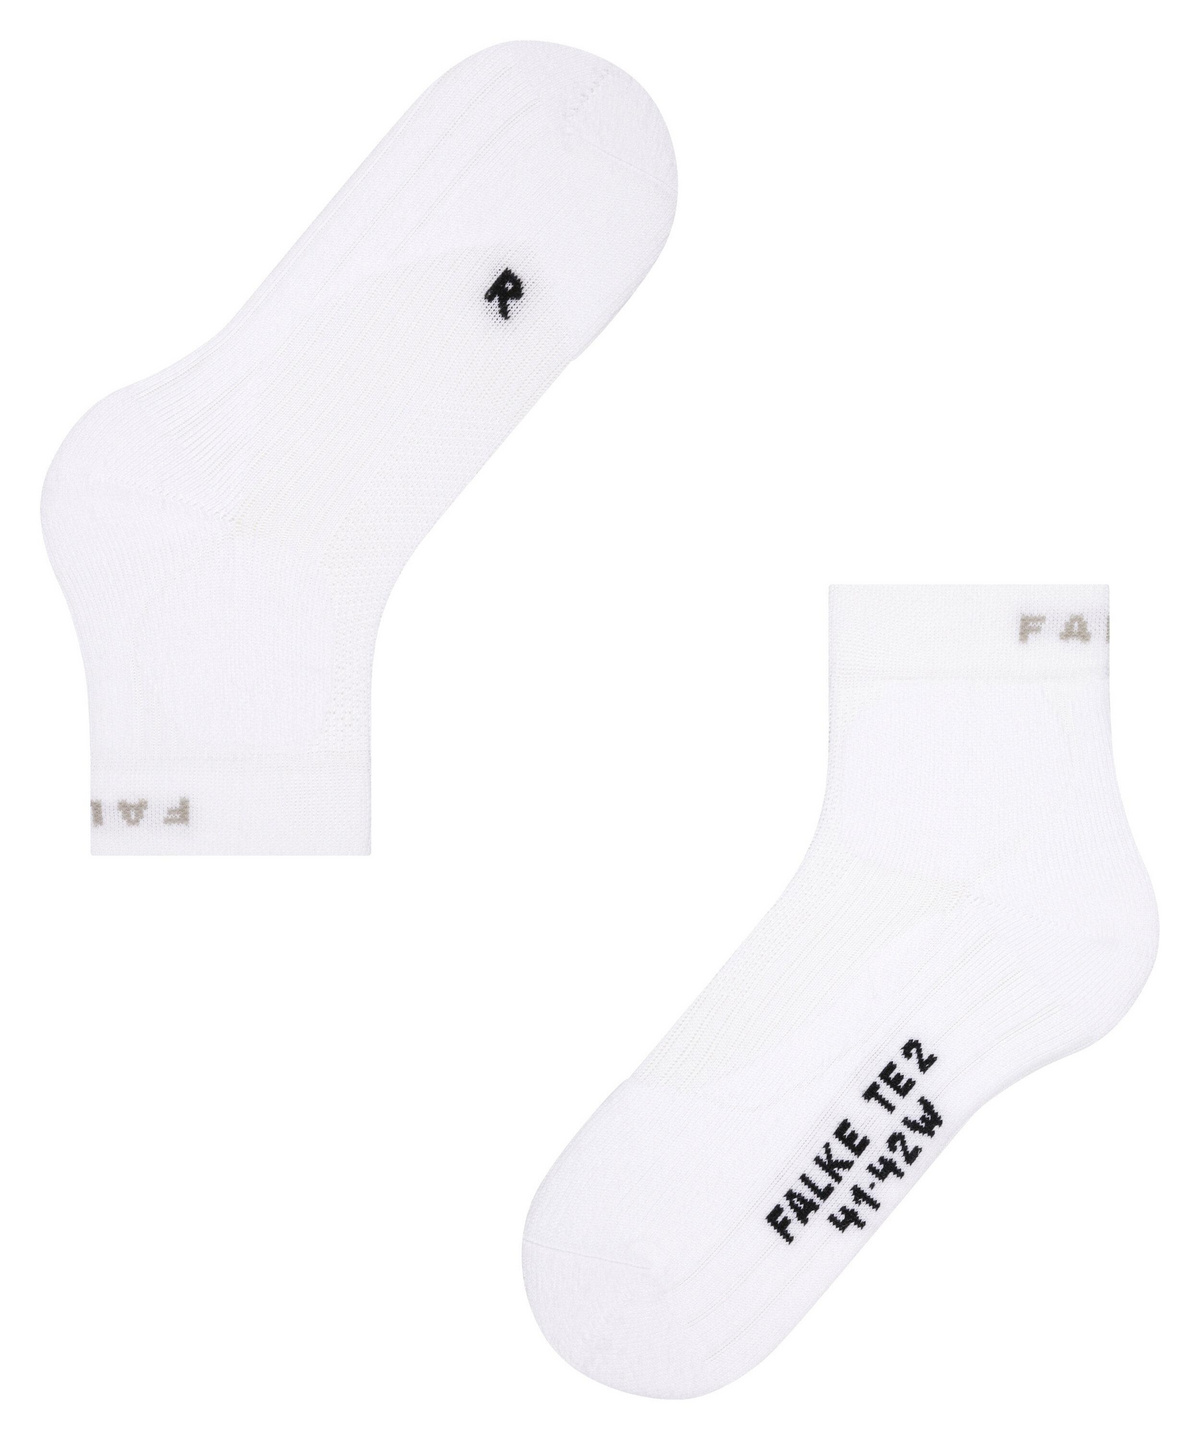 White Cotton Blend Manufacturer size: 39-41 1 Pair FALKE Men TE2 Tennis Socks UK 5.5-7.5 White 2000 